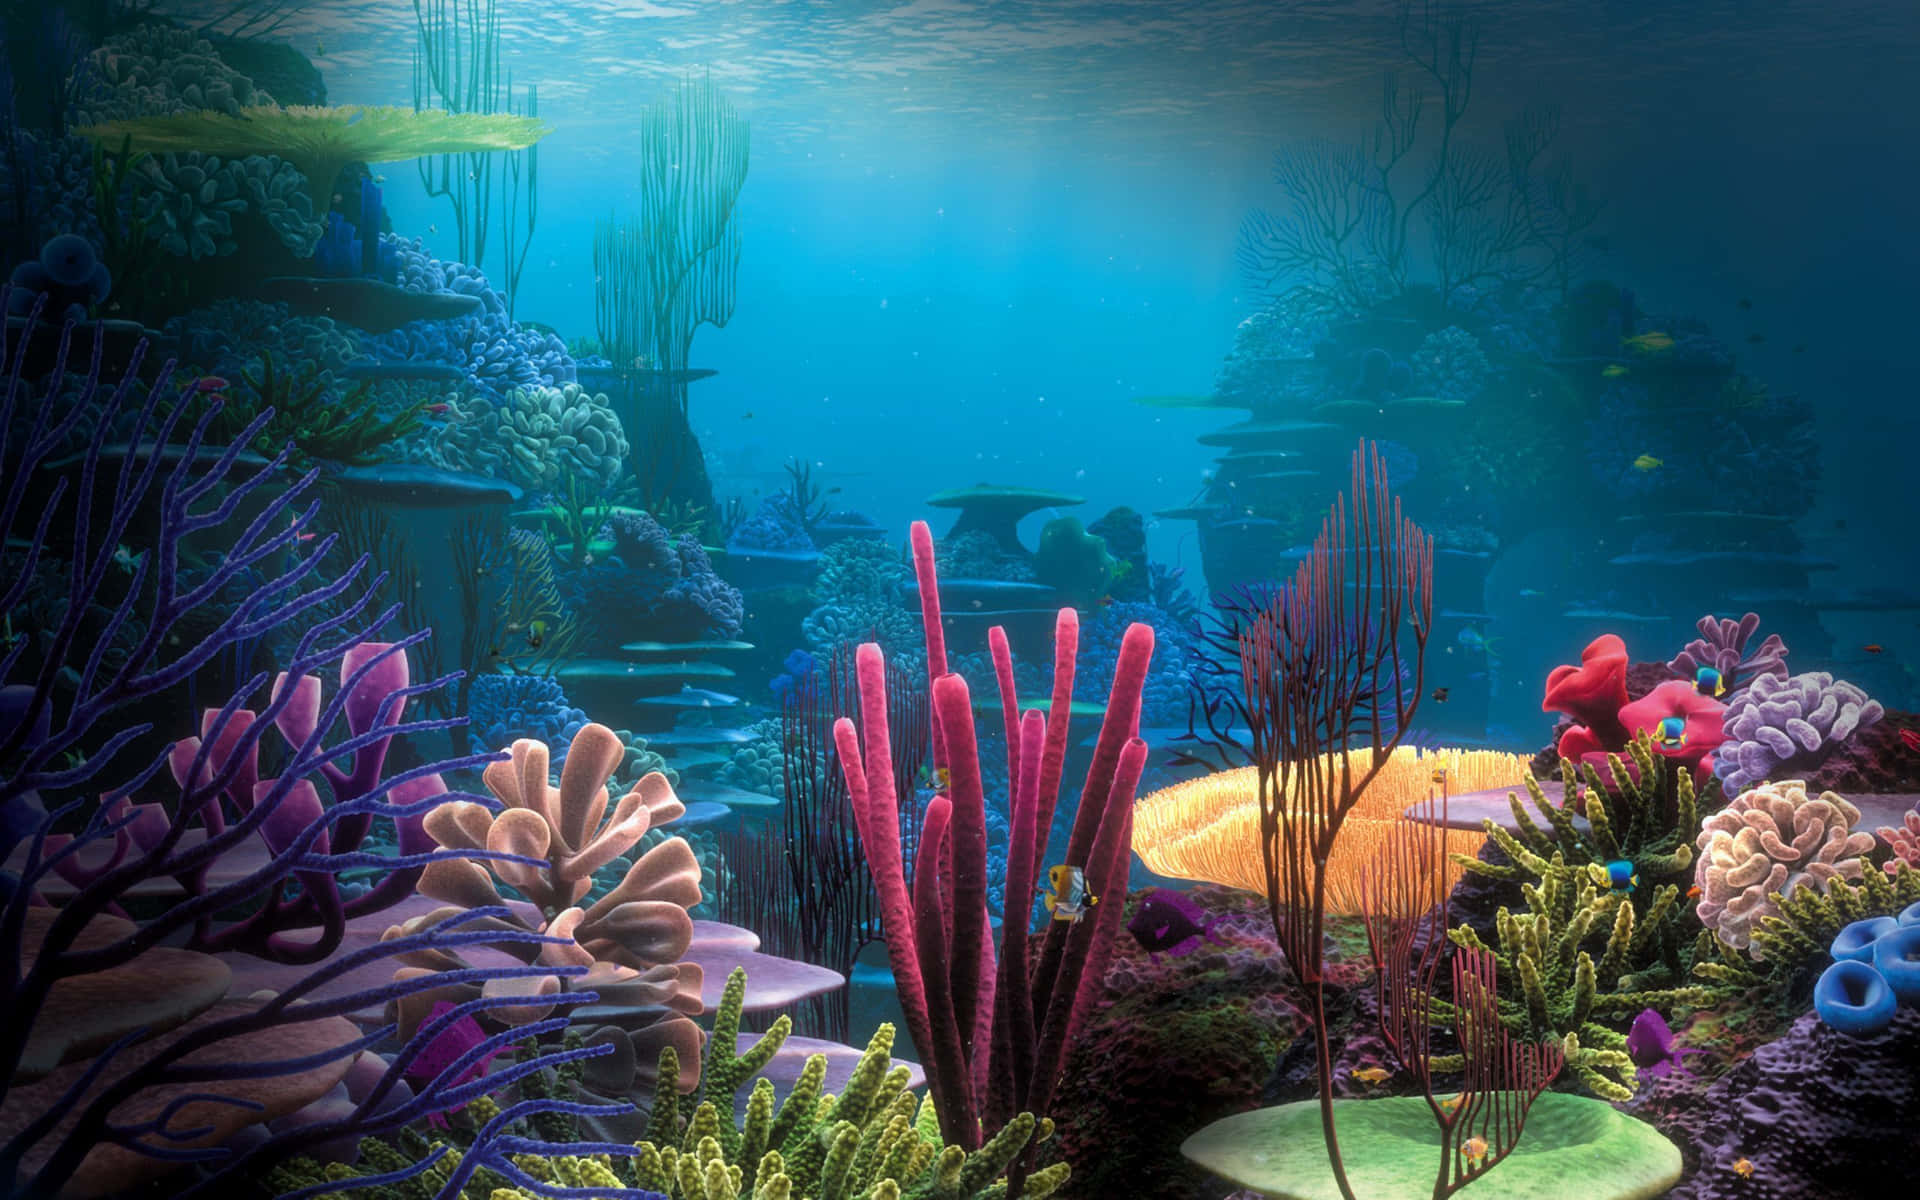 Stunning underwater view in the ocean depths